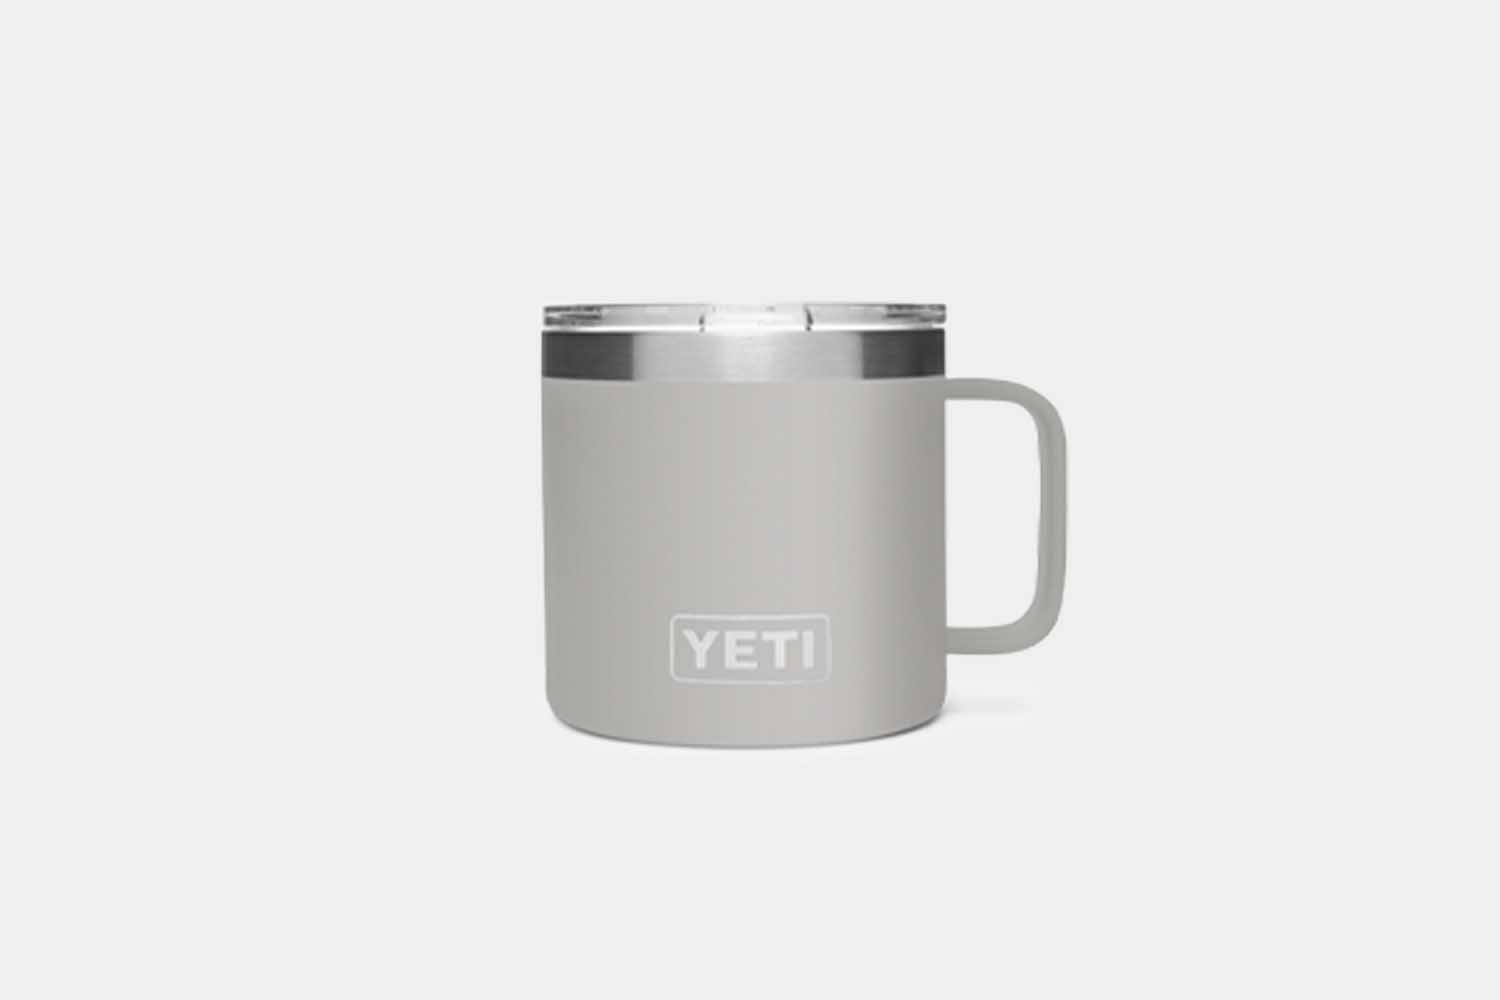 YETI's New Leak-Proof Travel Mug Just Dropped - InsideHook